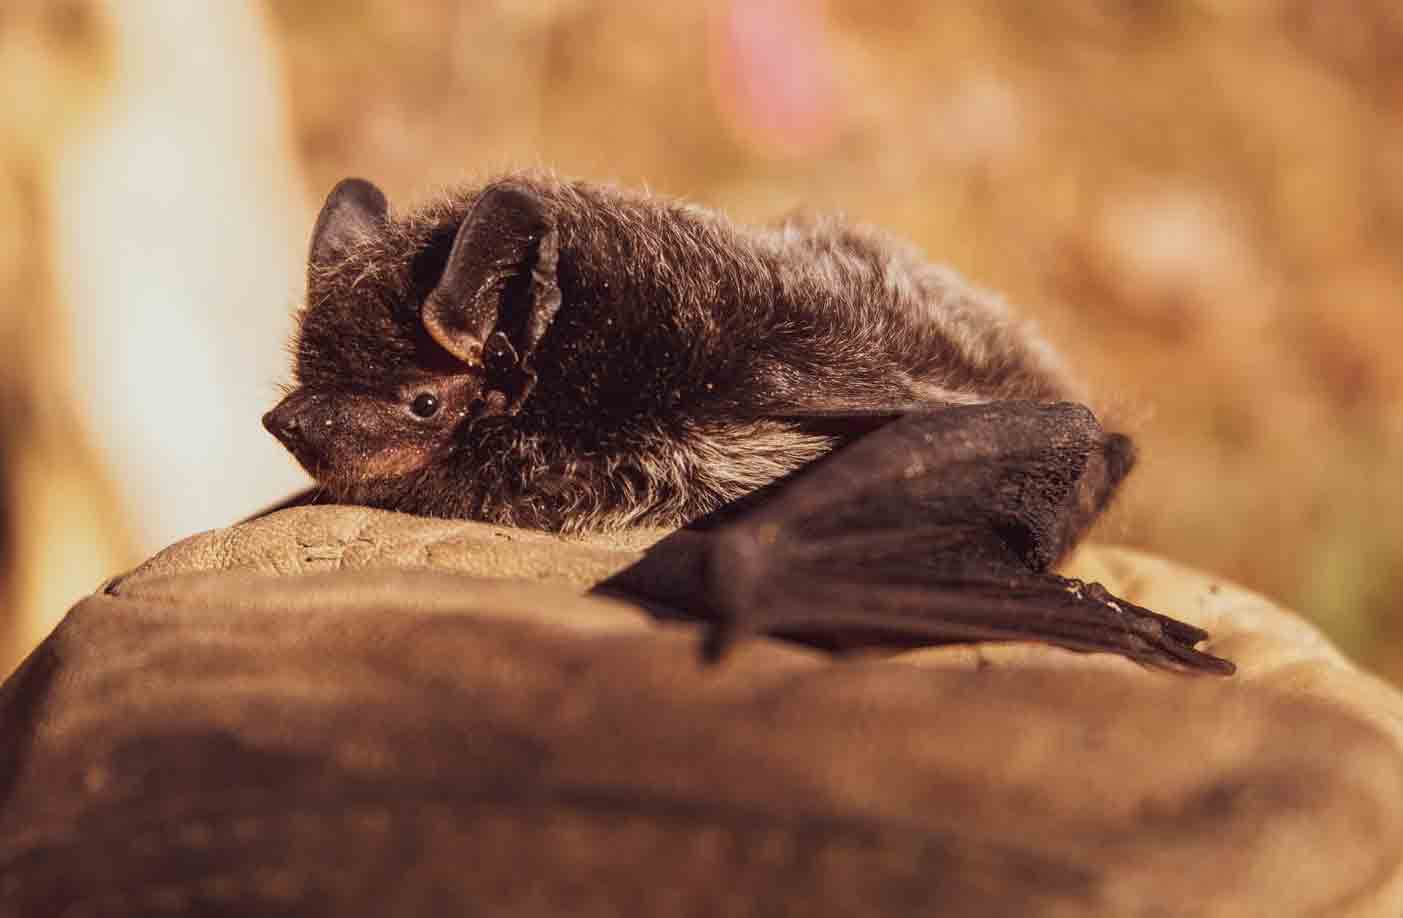 Menino morre após contrair raiva por mordida de morcego